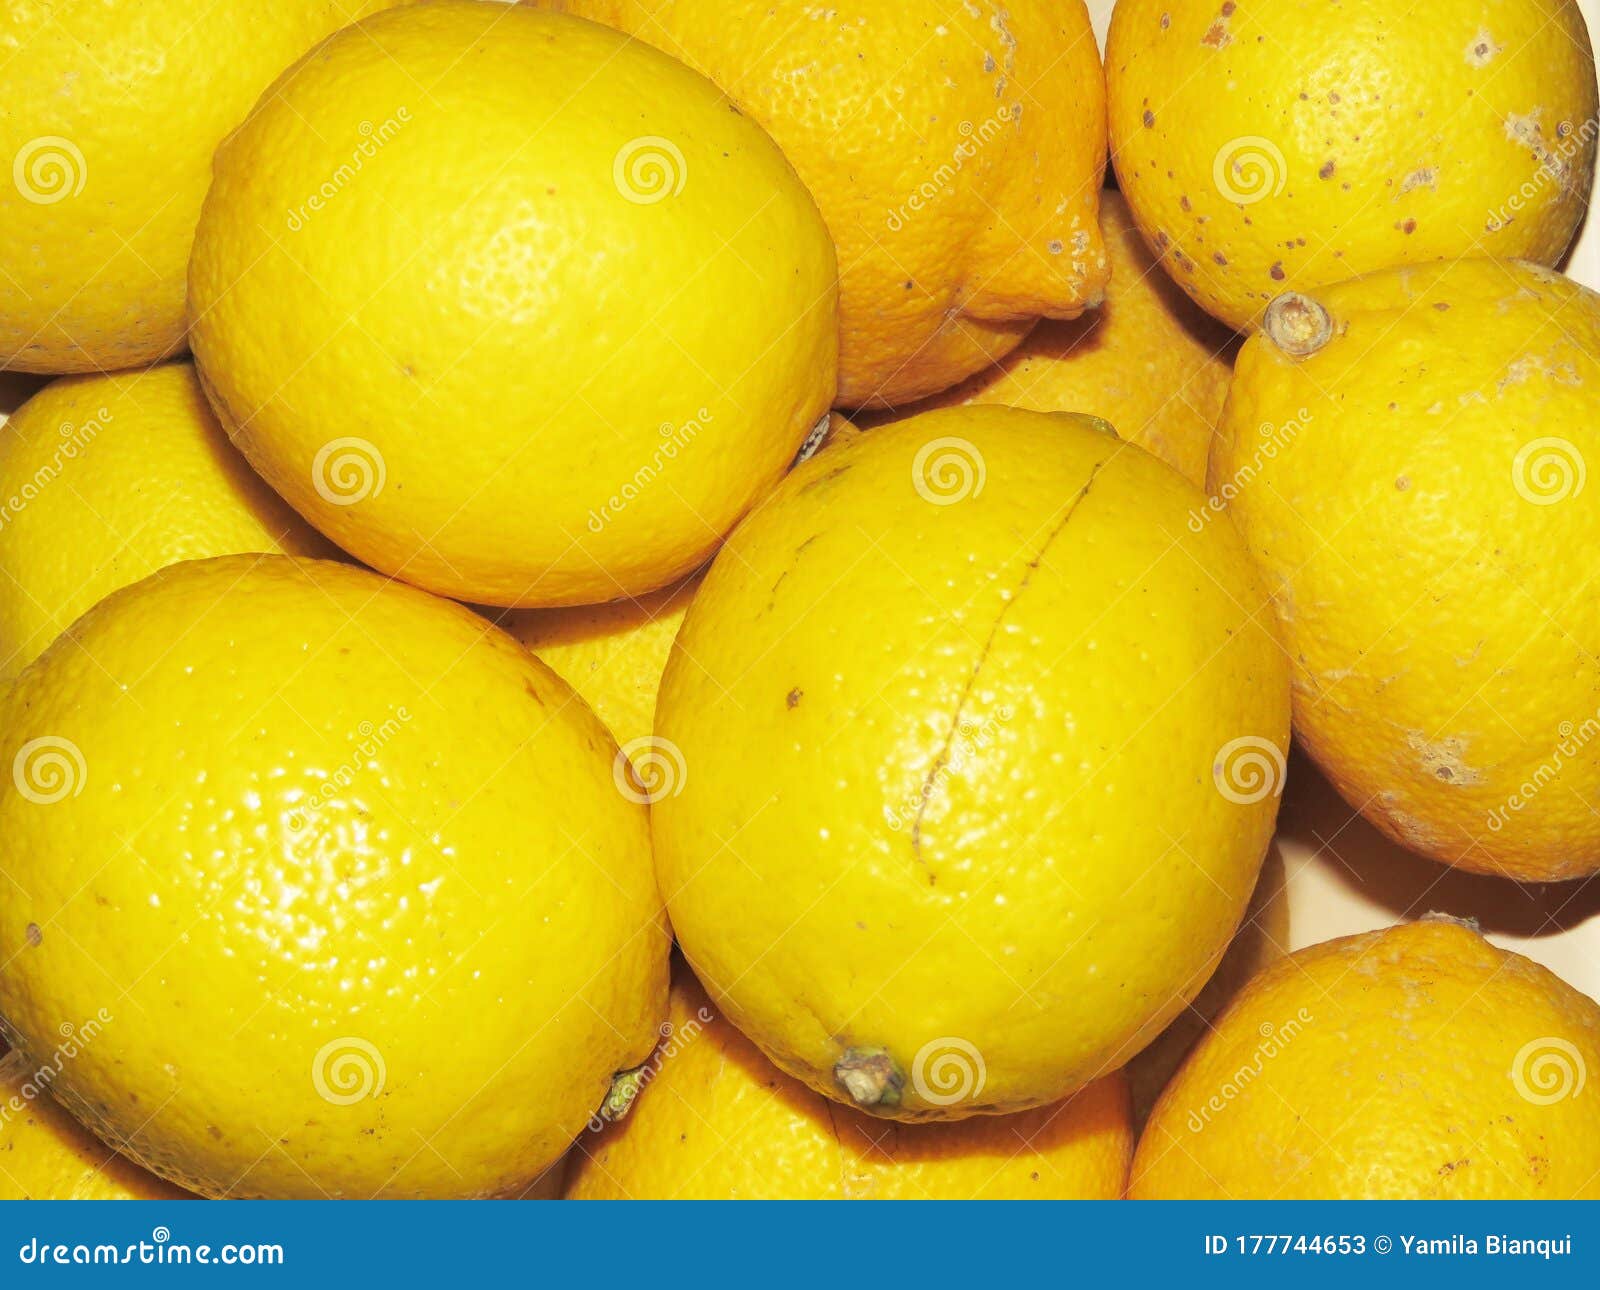 vibrant yellow lemons background